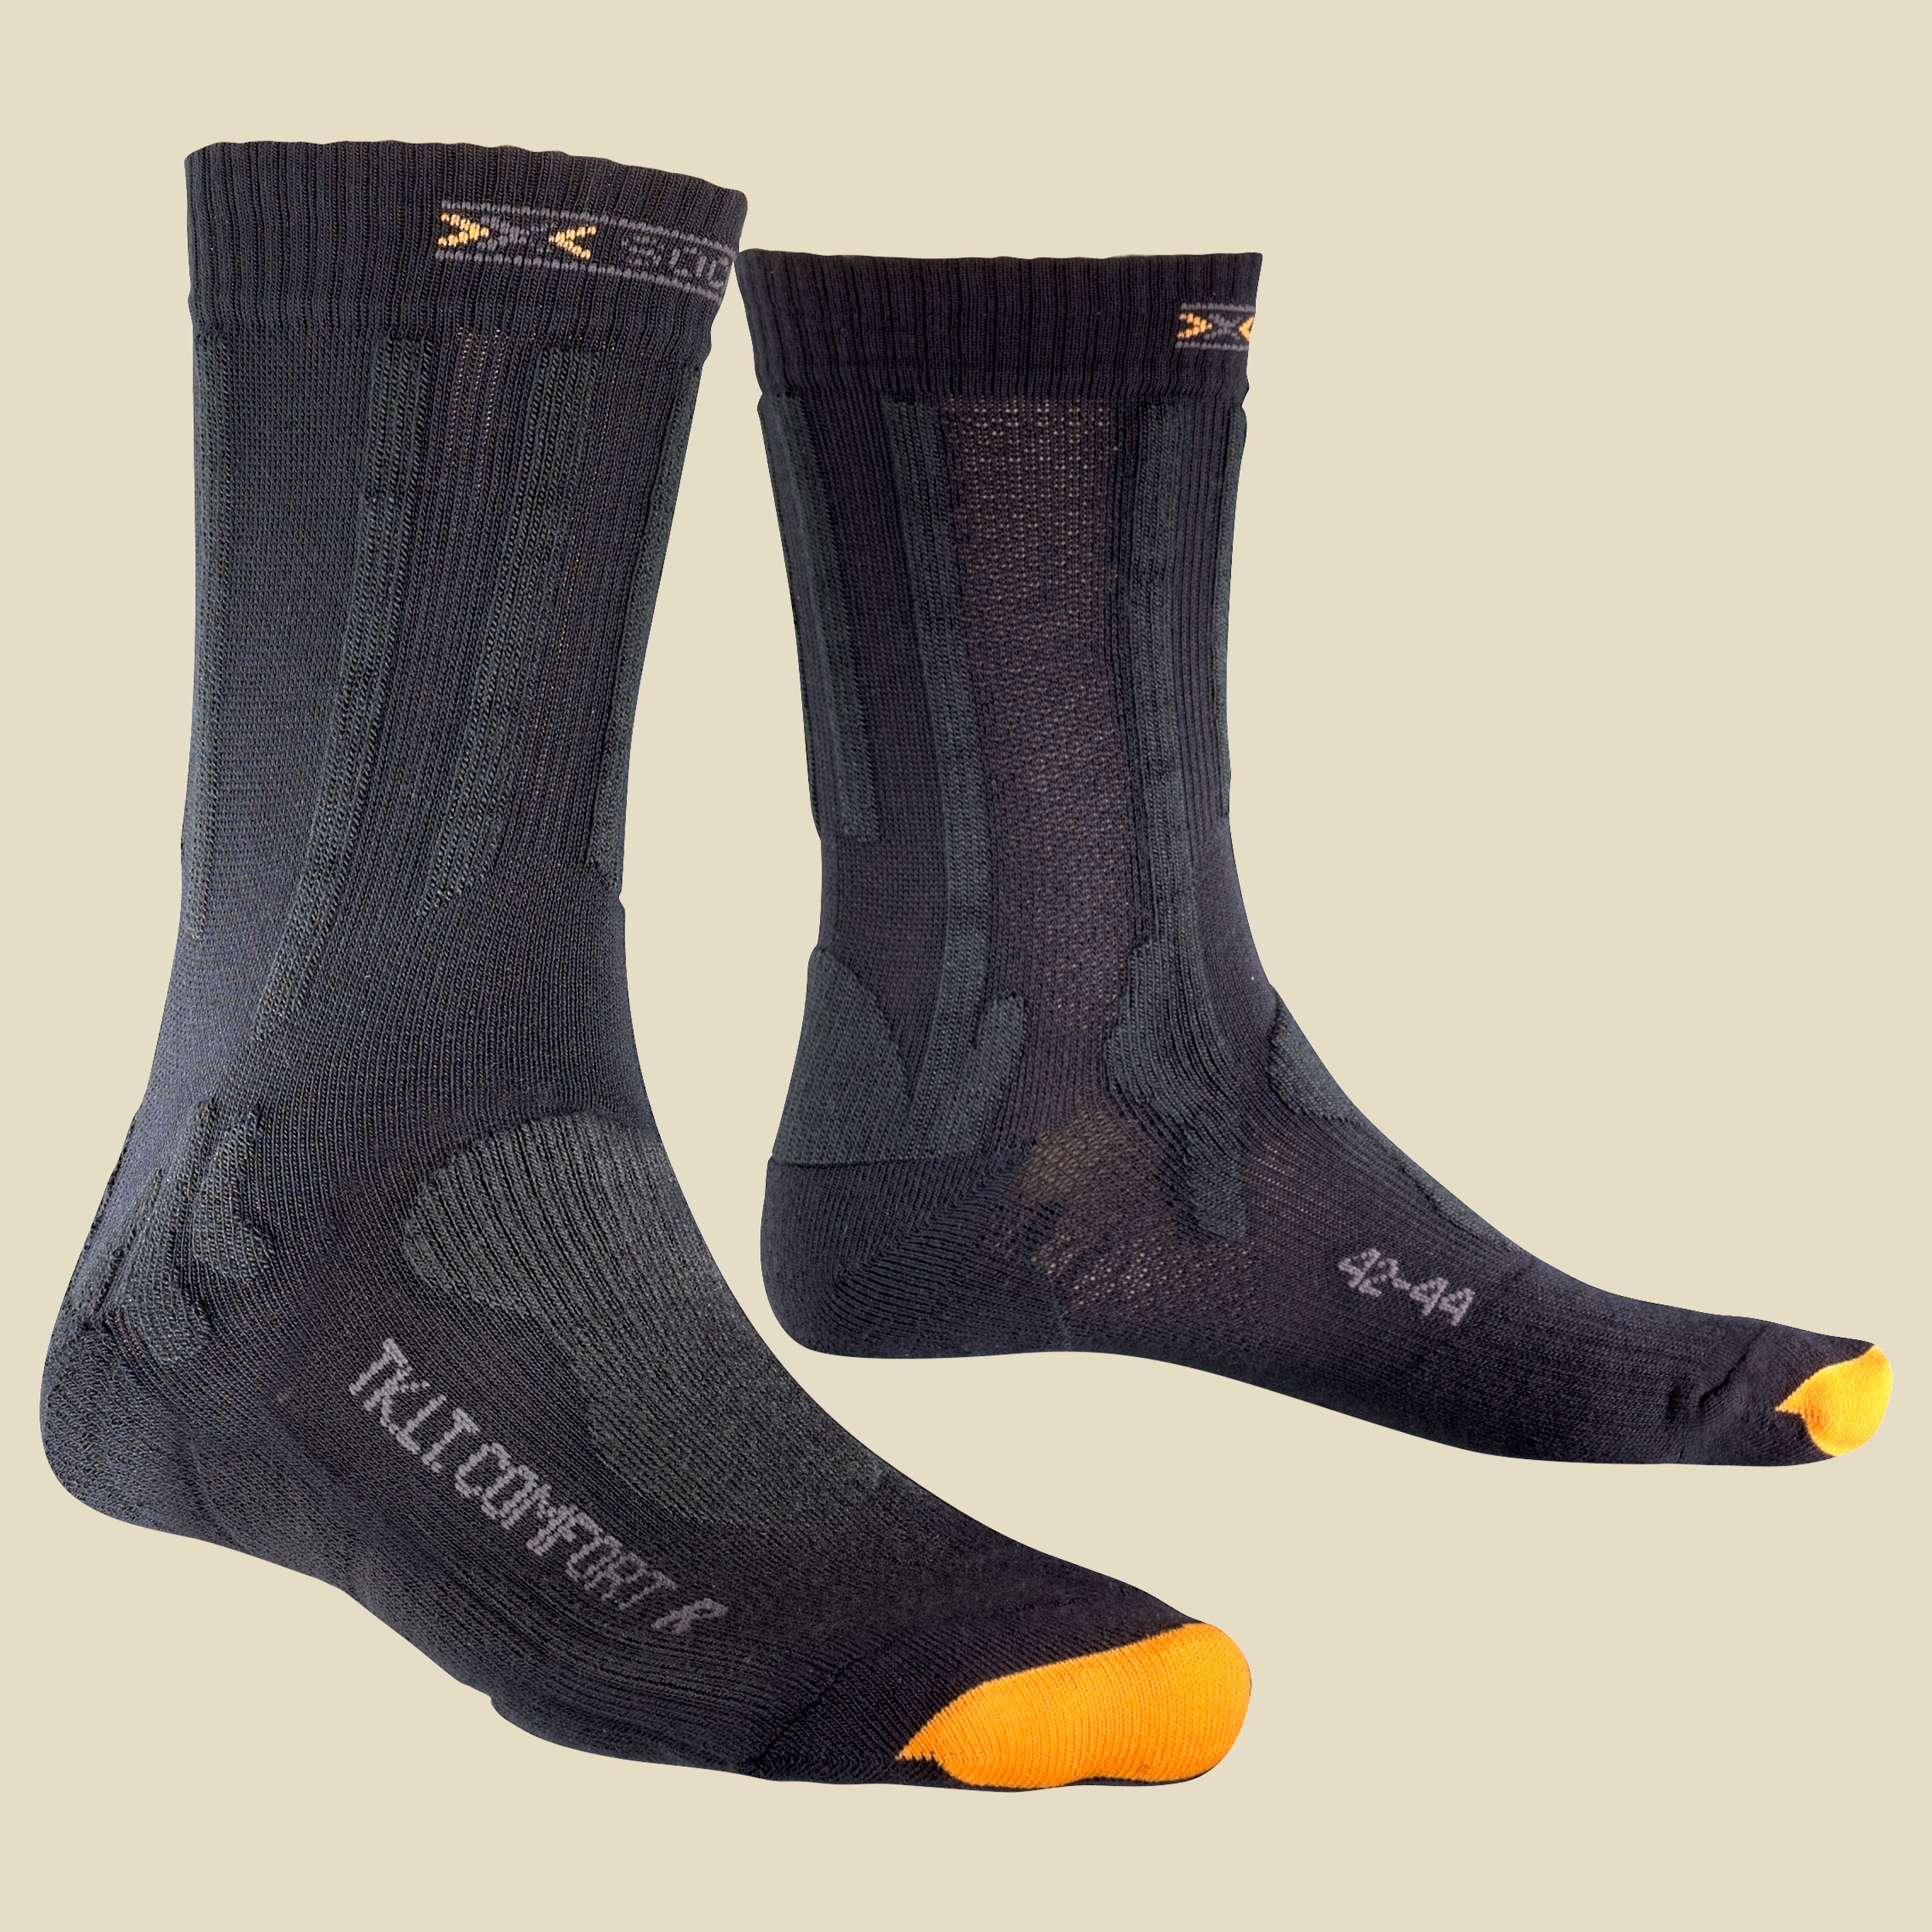 X-Socks Trekking Light & Comfort Größe 39-41 Farbe charcoal/anthracite